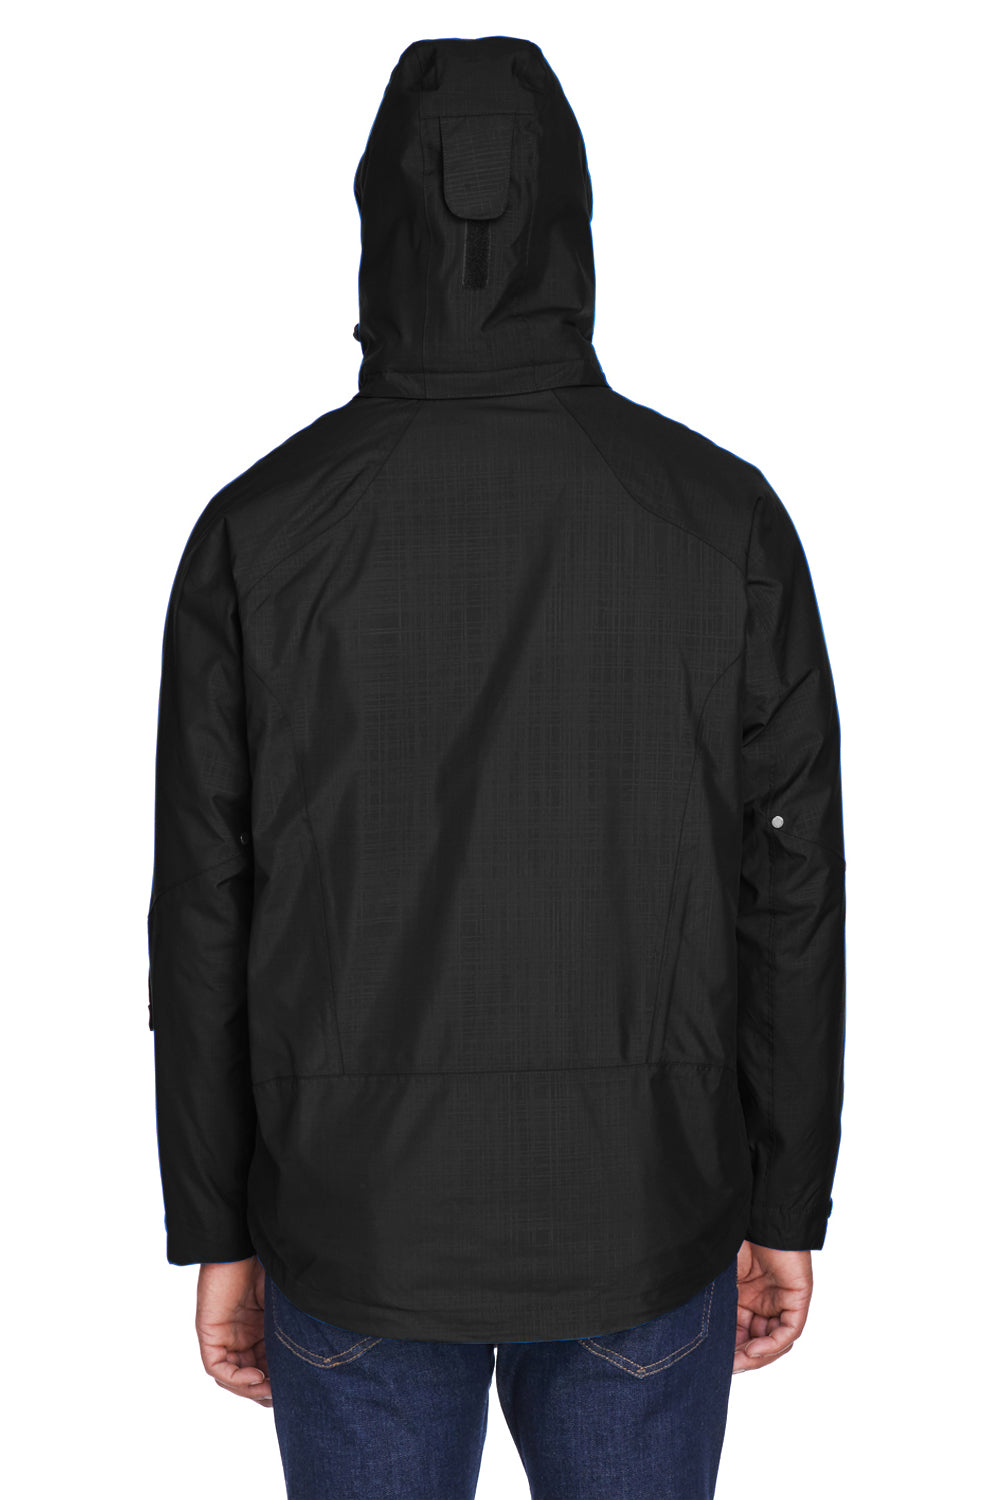 North End 88178 Mens Caprice 3-in-1 Full Zip Hooded Jacket Black Back